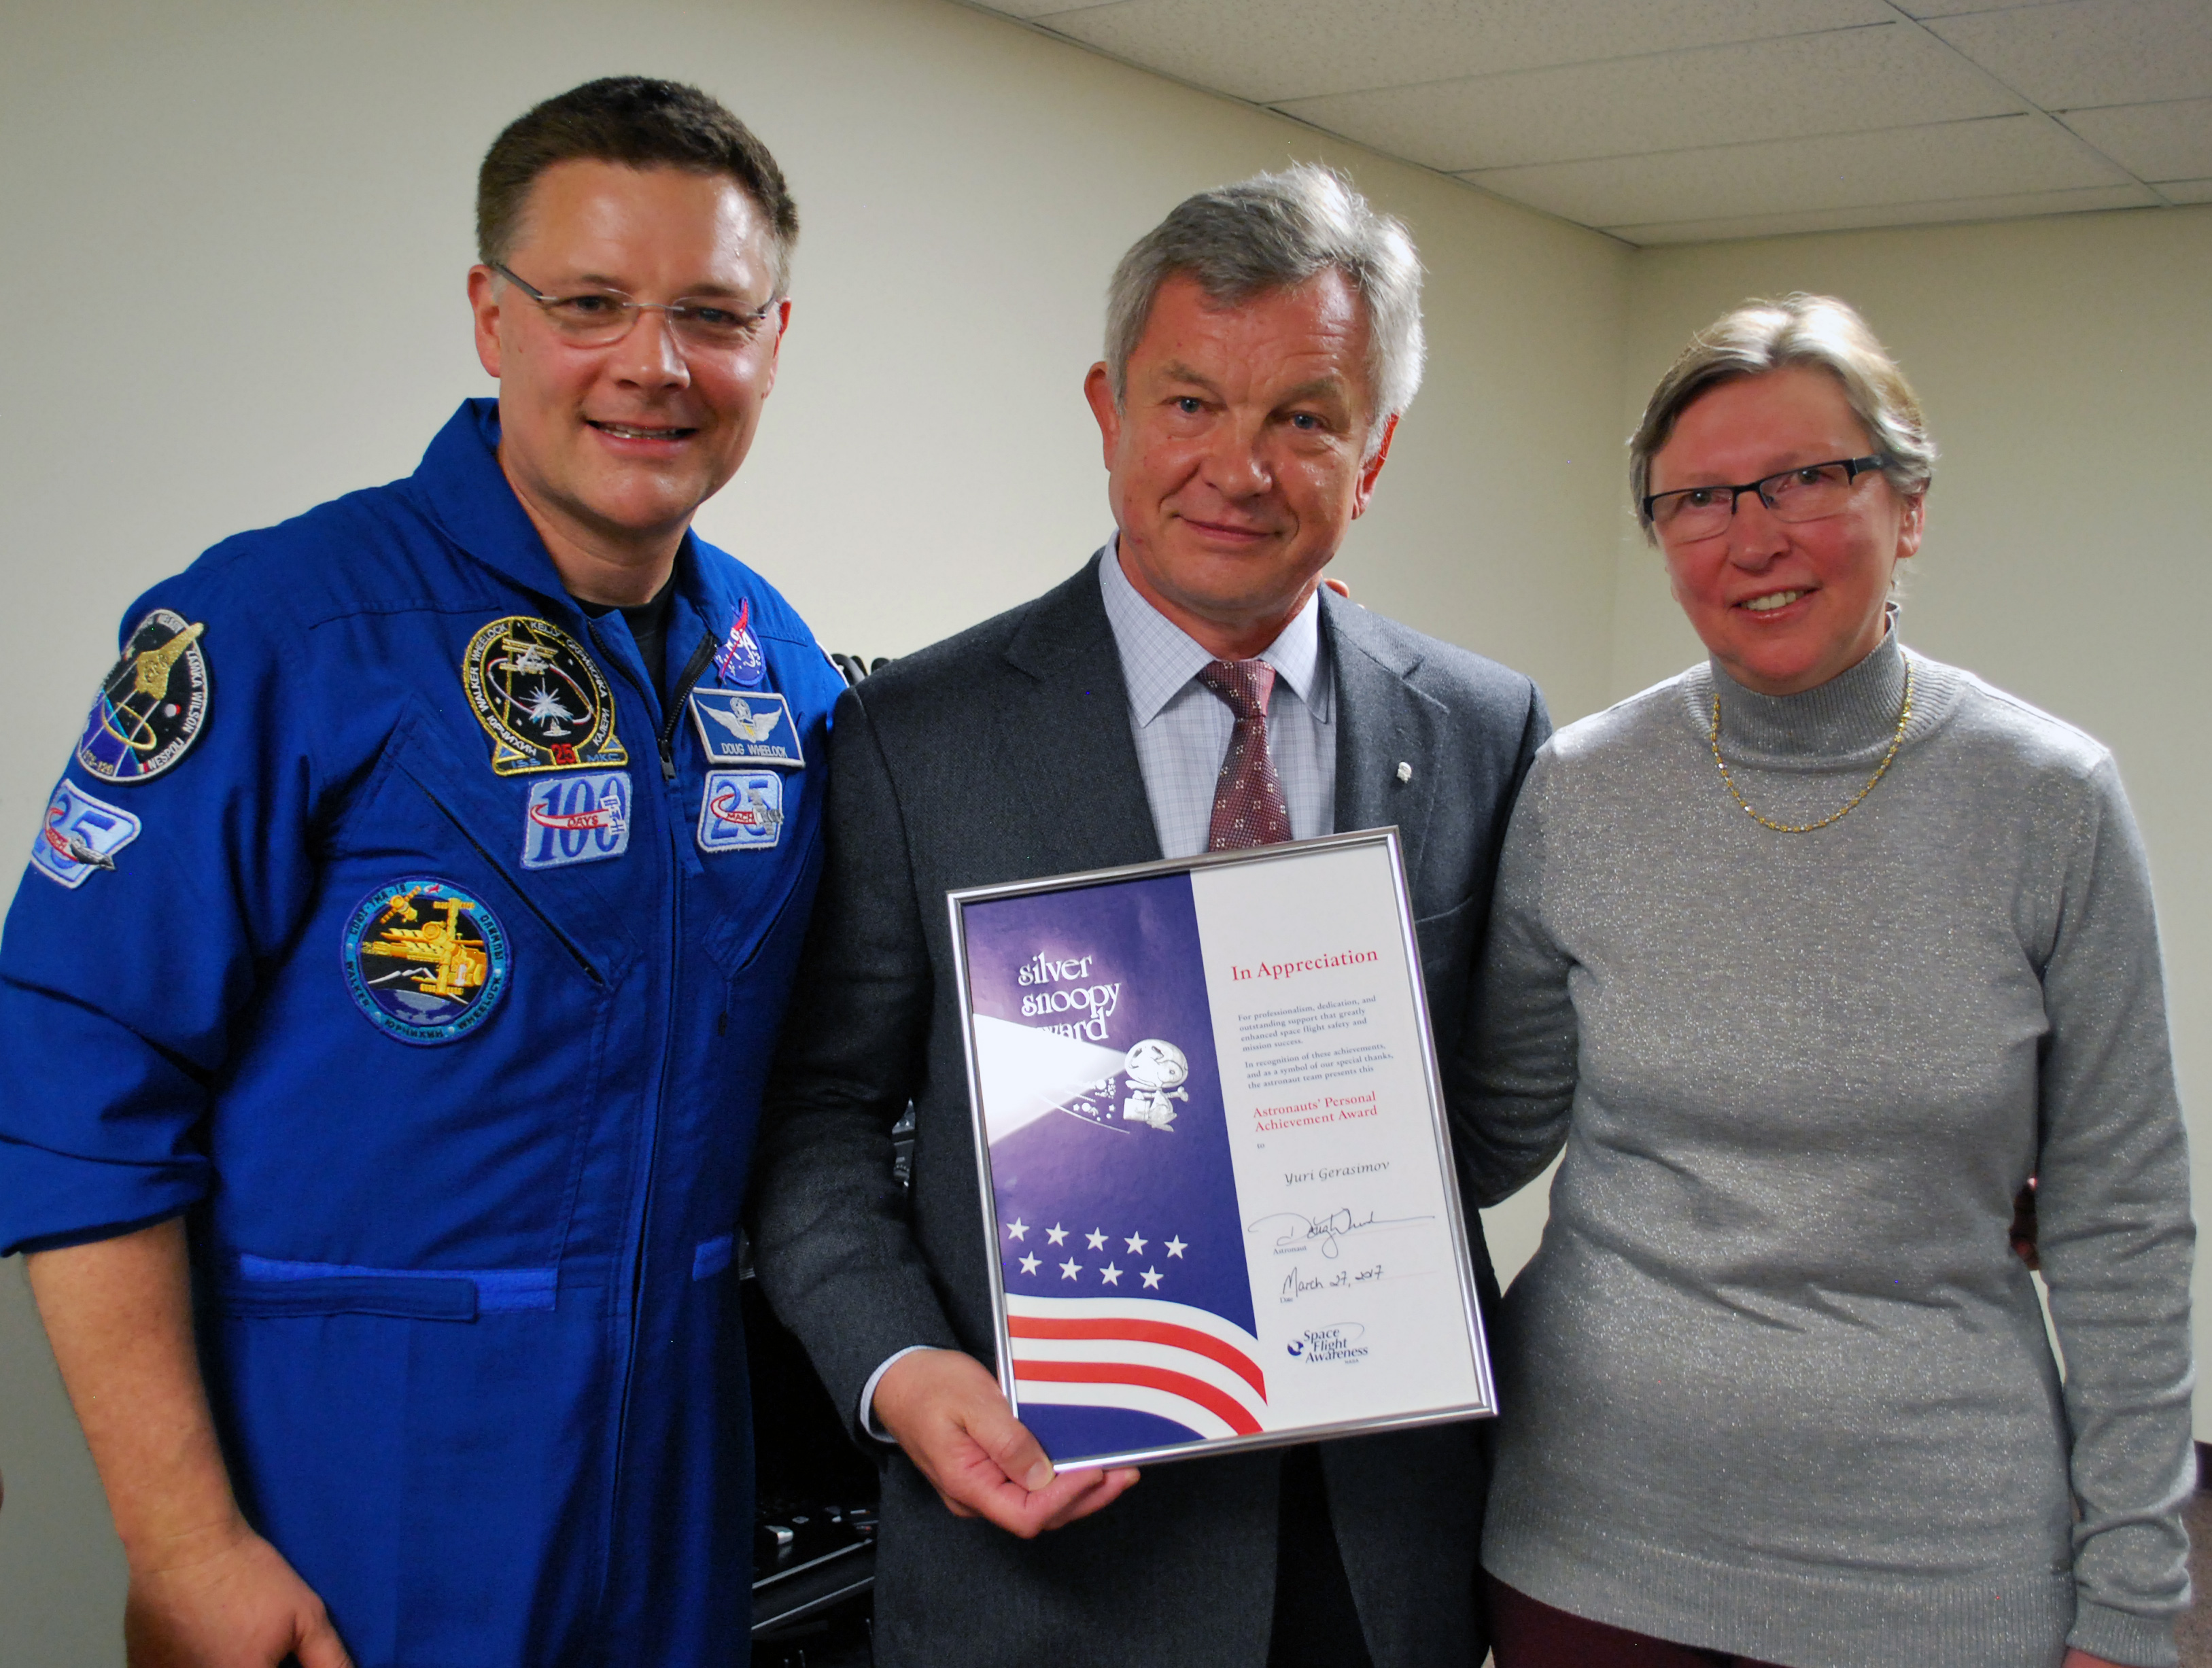 Pictured: Yuri Gerasimov and his wife Nina, along with NASA Astronaut Colonel Douglas Wheelock